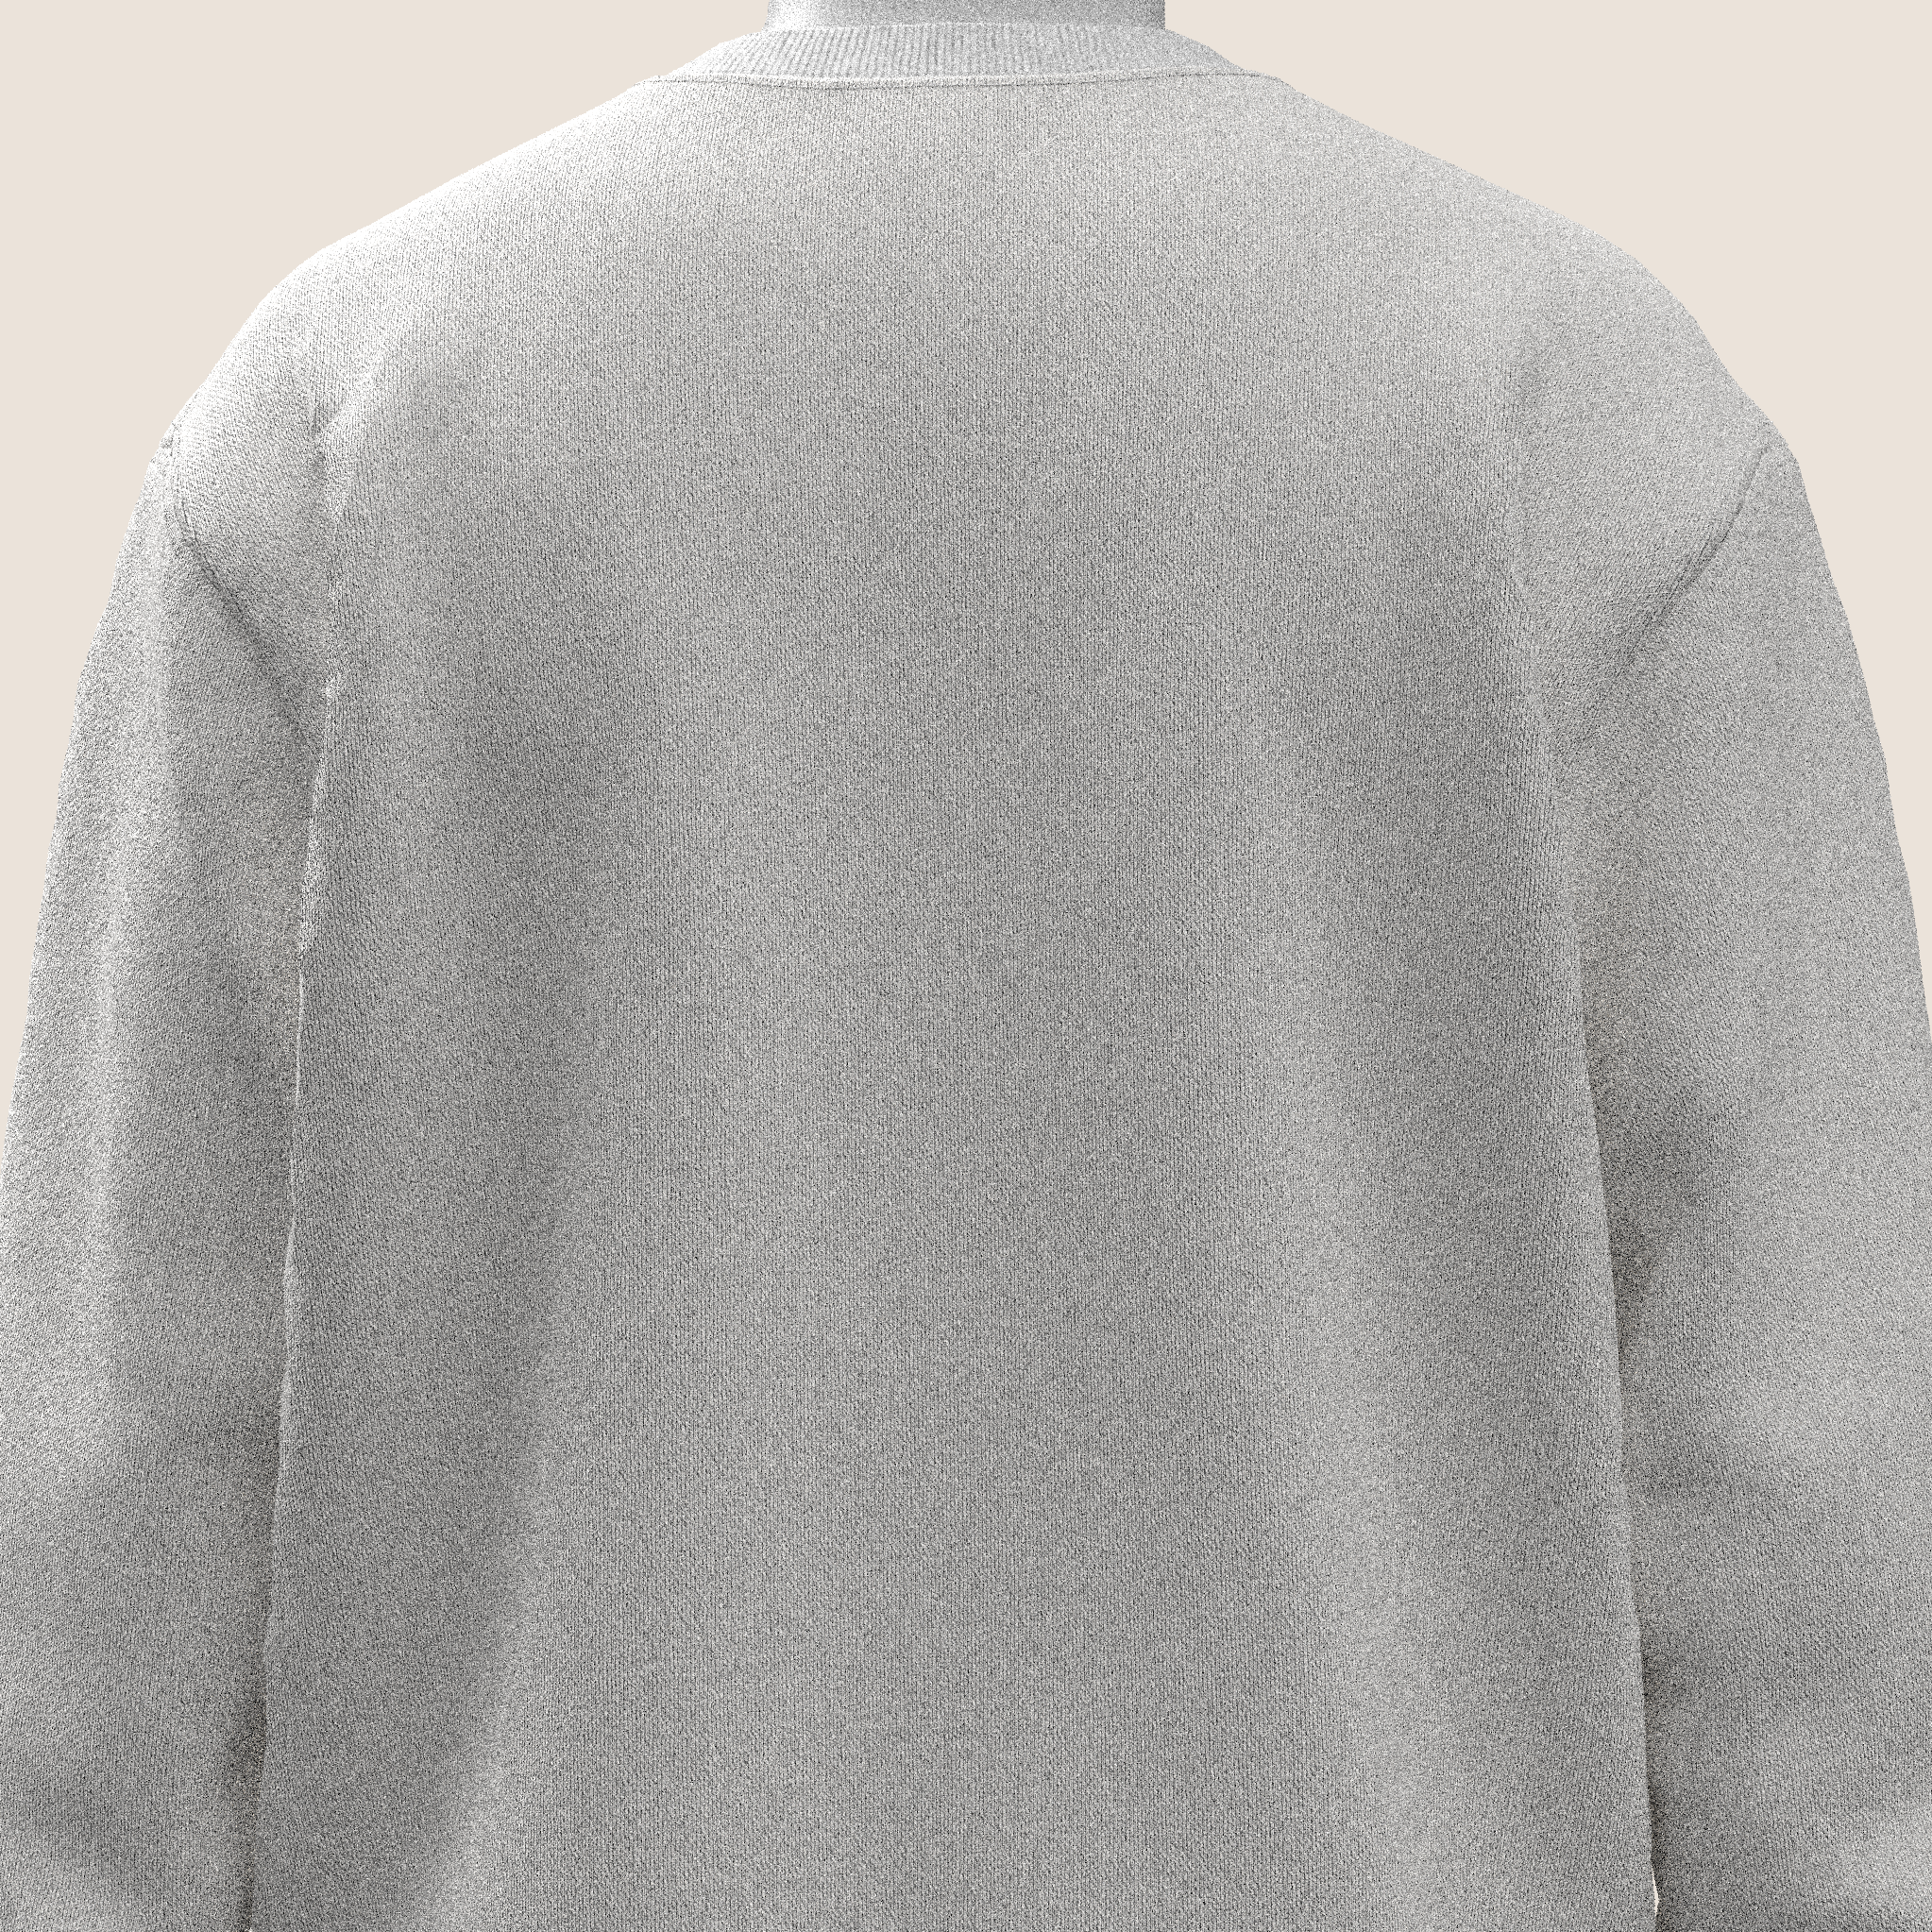 Dot Com Sweatshirt - White